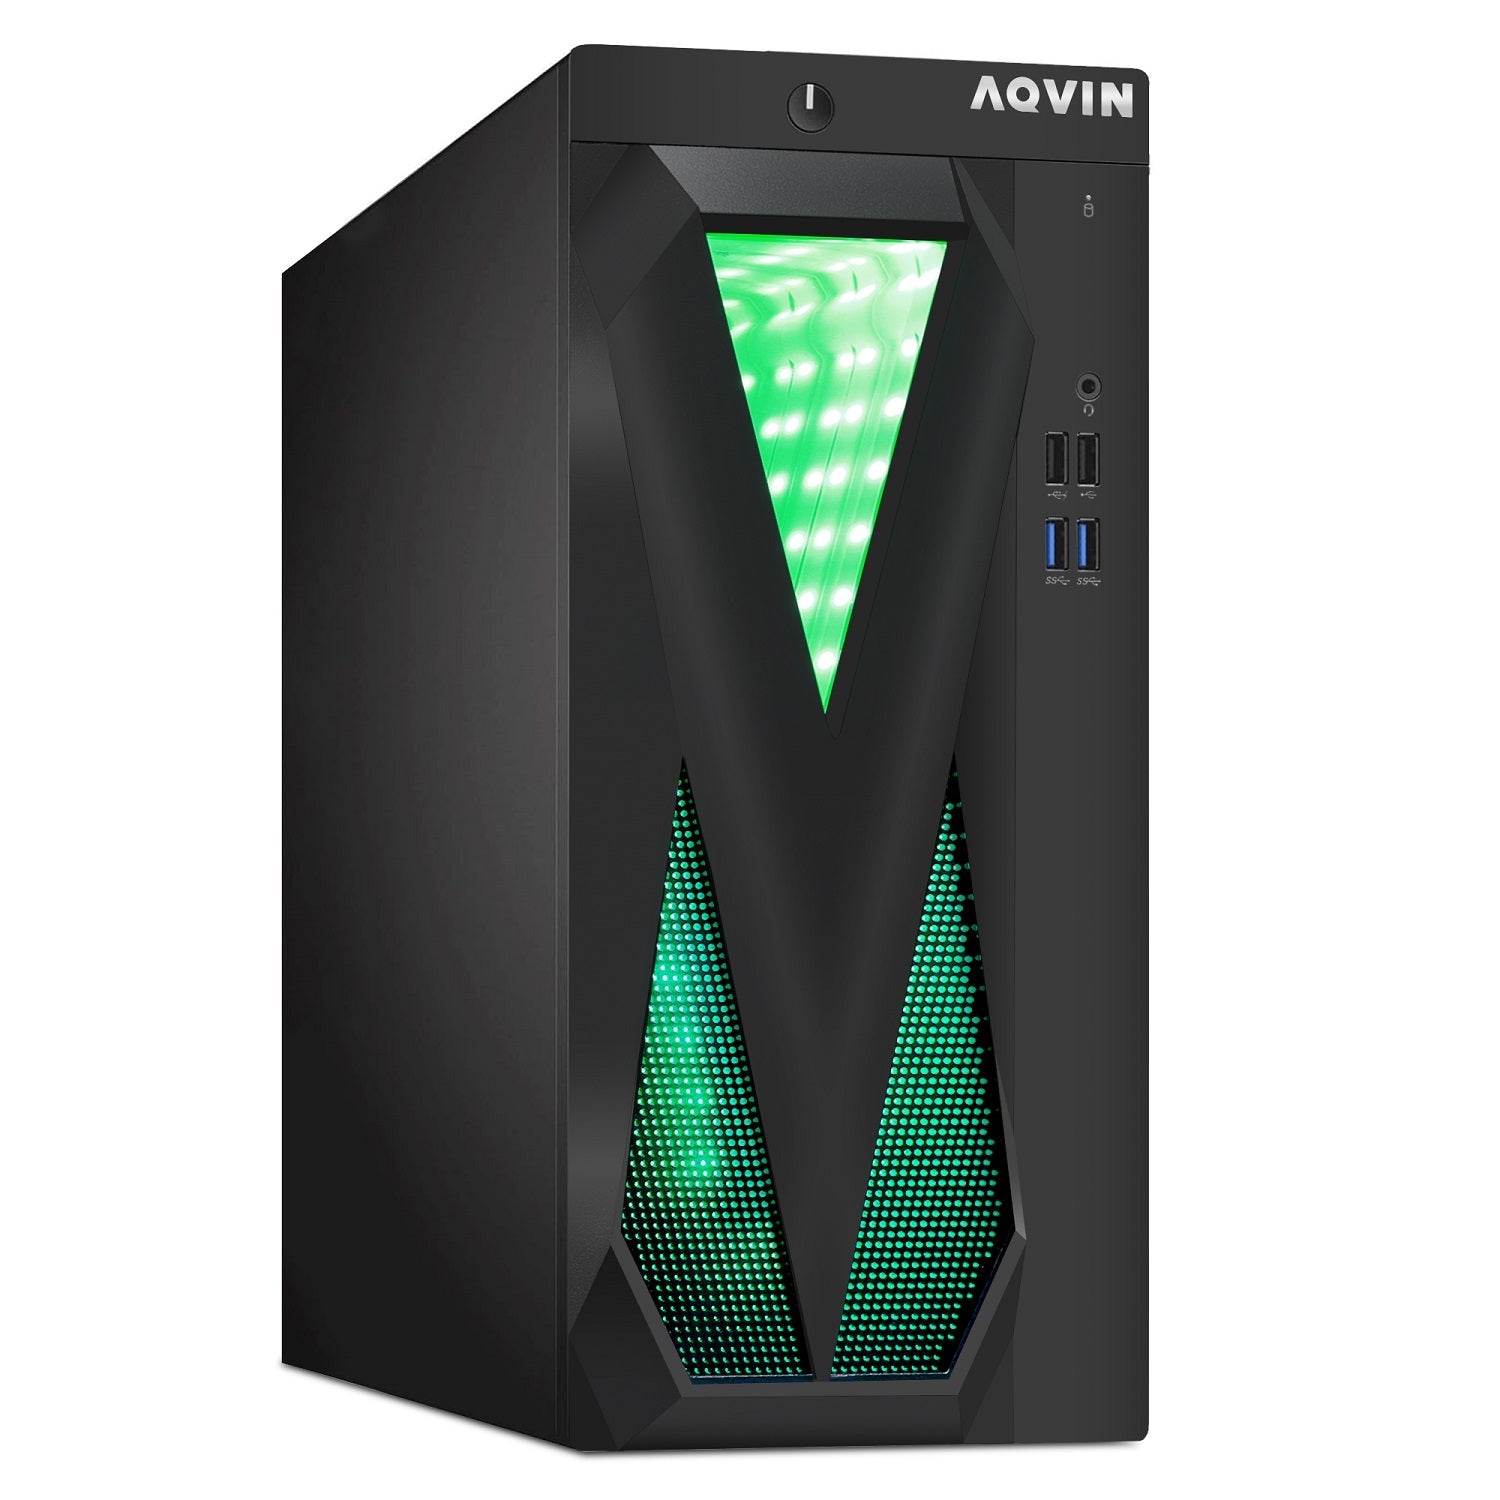 AQVIN Tower Desktop Computer Windows 11 Pro Gaming PC, 27-inch Curved Gaming Monitor, Intel Core i5 - i7 8th Gen CPU,  32GB DDR4 RAM, 1TB SSD, RX 550/GTX1630/1050Ti/1650 HDMI, WIFI - Refurbished